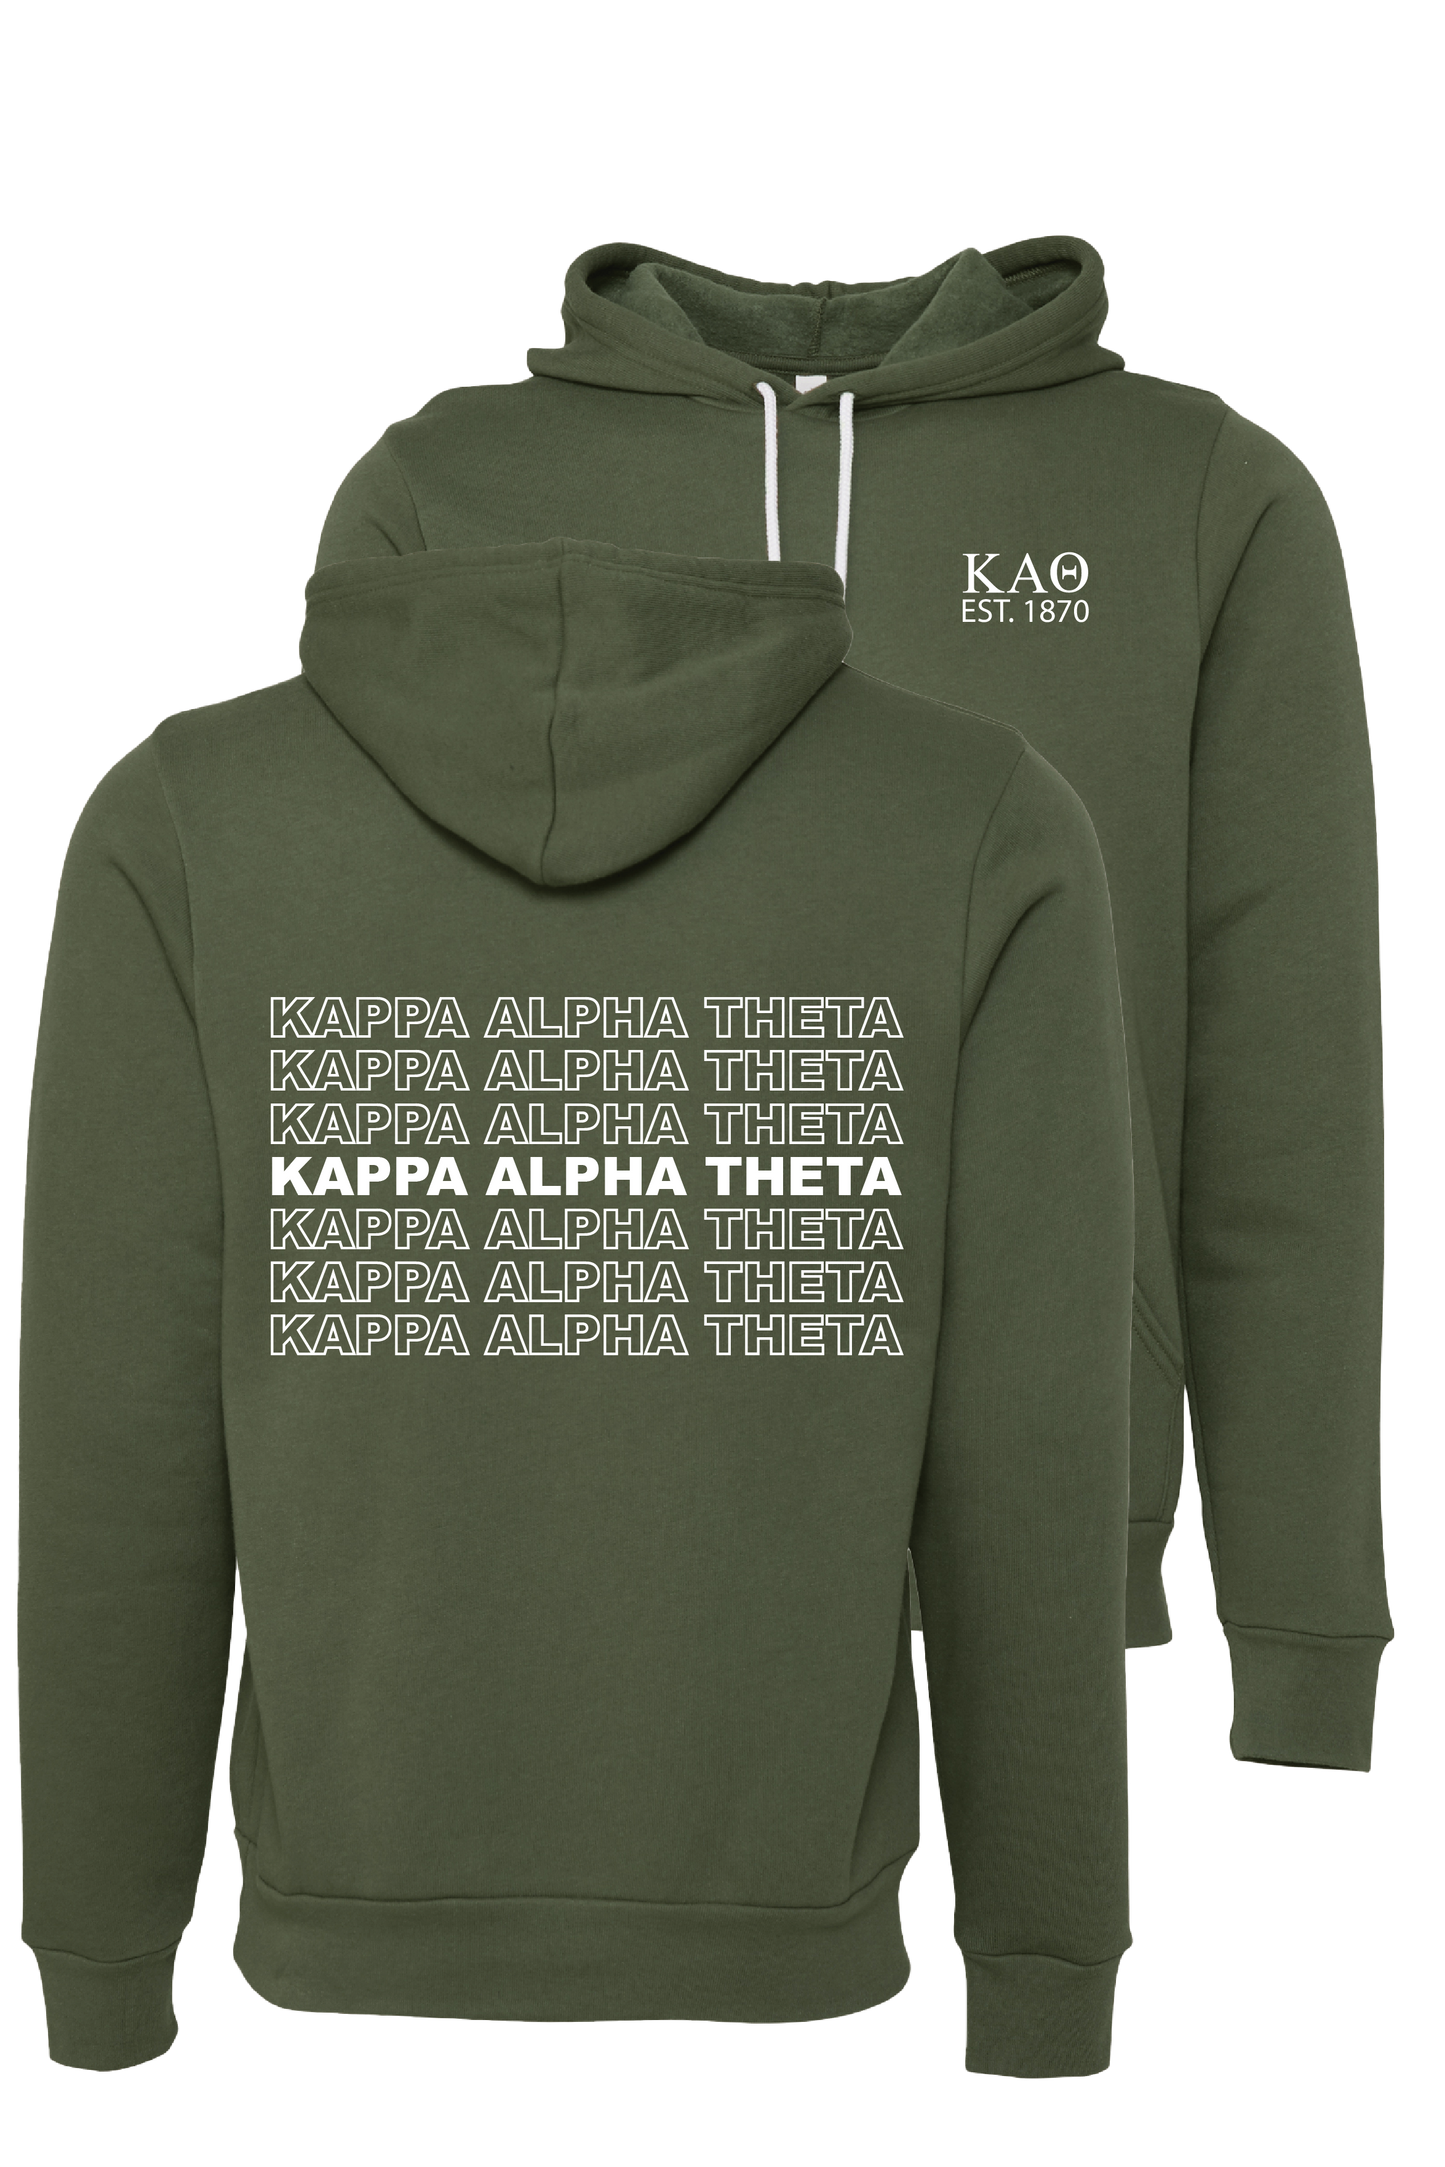 Kappa Alpha Theta Repeating Name Hooded Sweatshirts